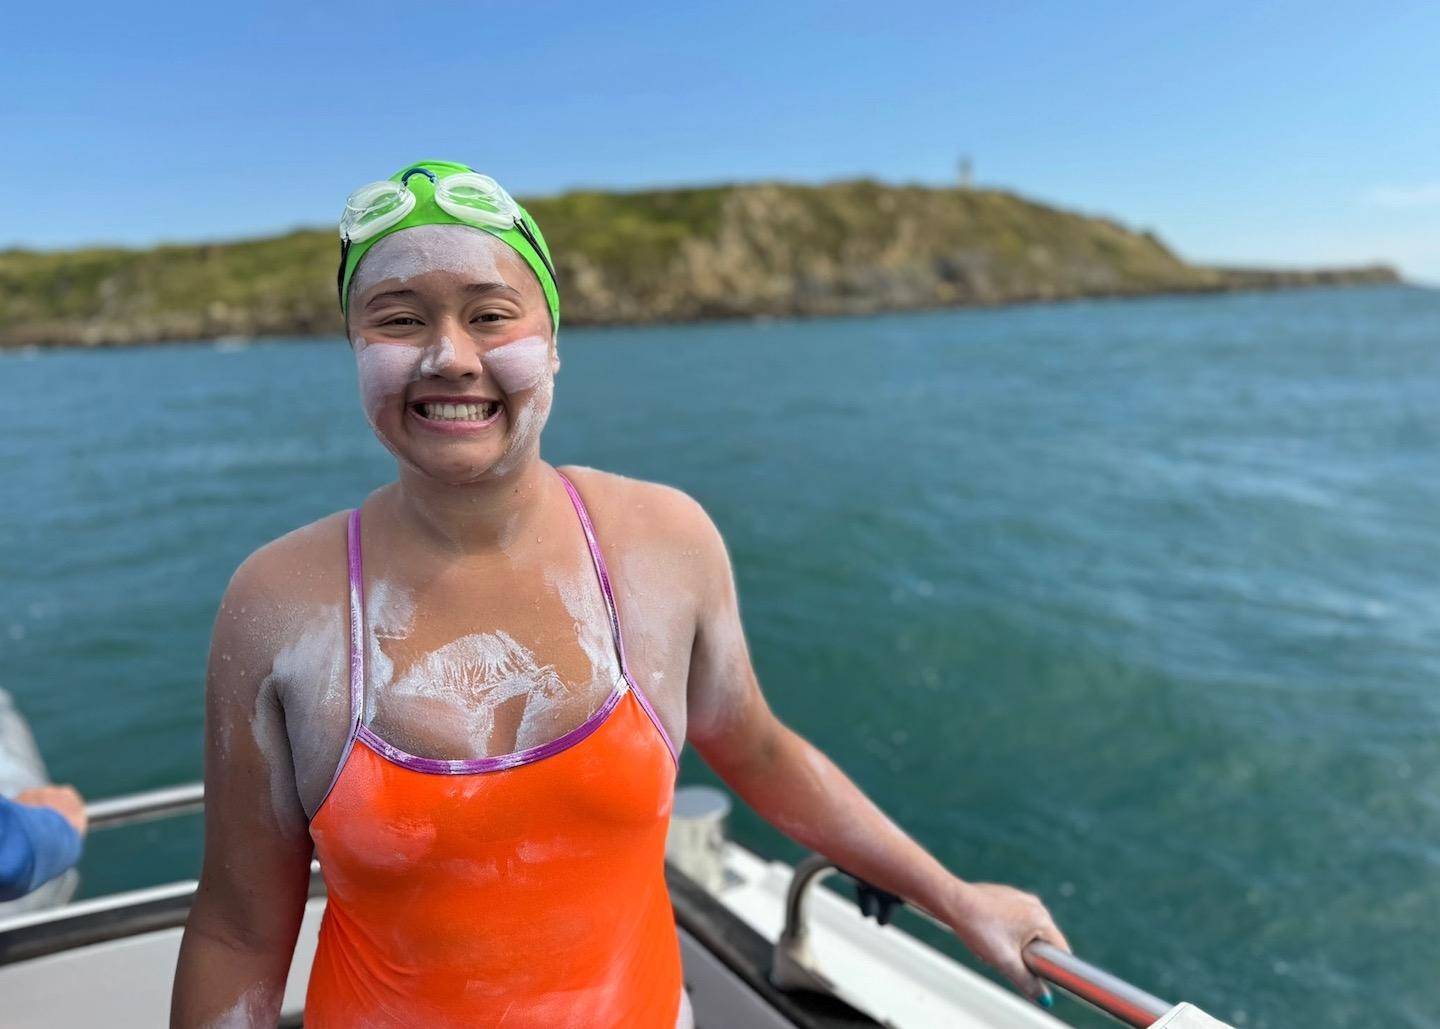 16-year-old Maya Merhige smashes English Channel swim